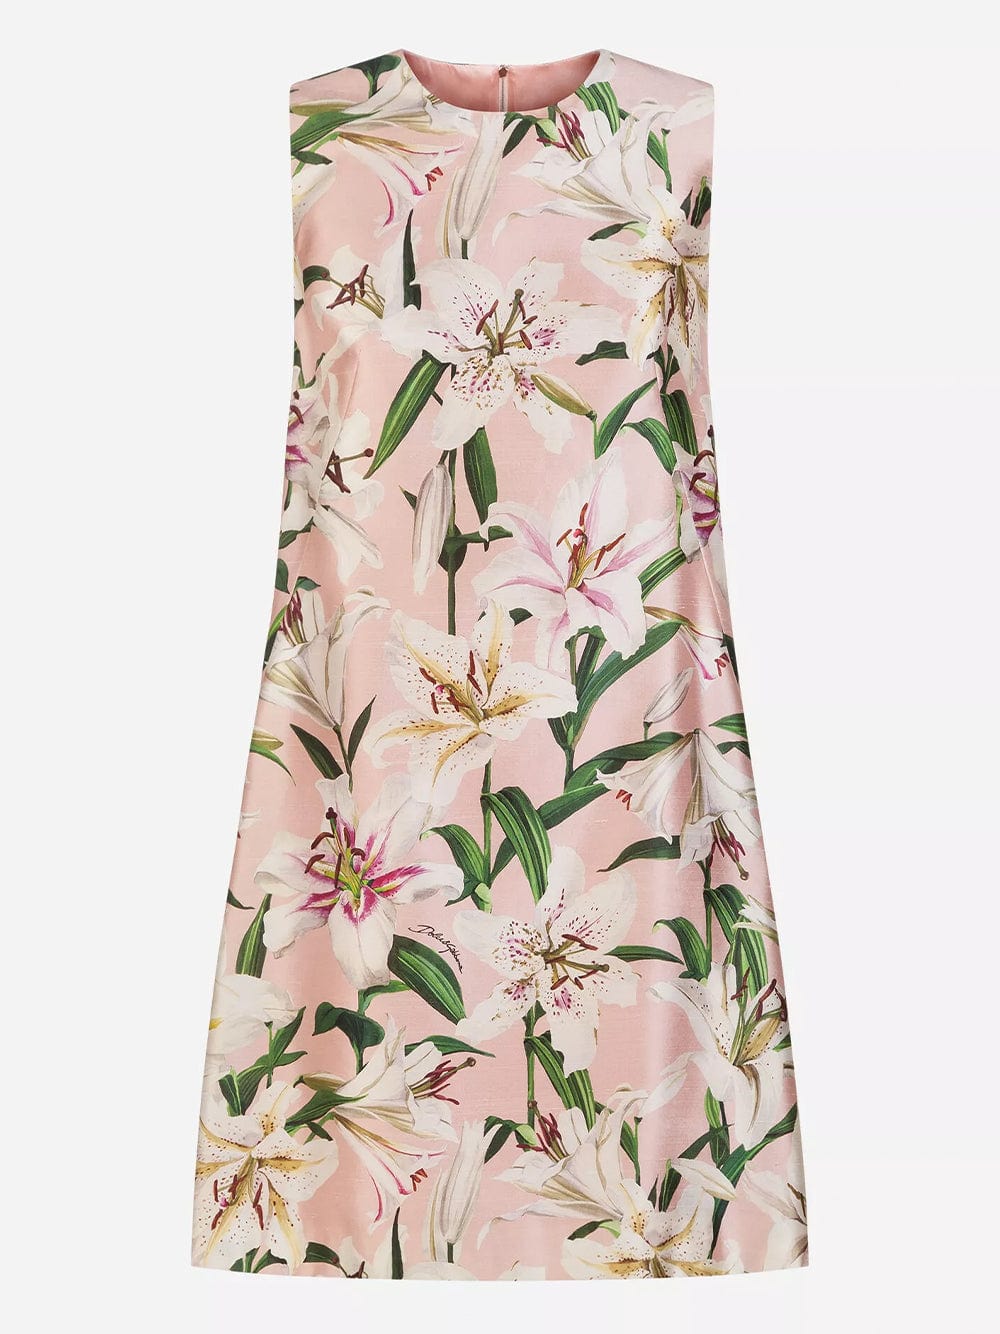 Dolce & Gabbana Lily-Print Shantung Dress